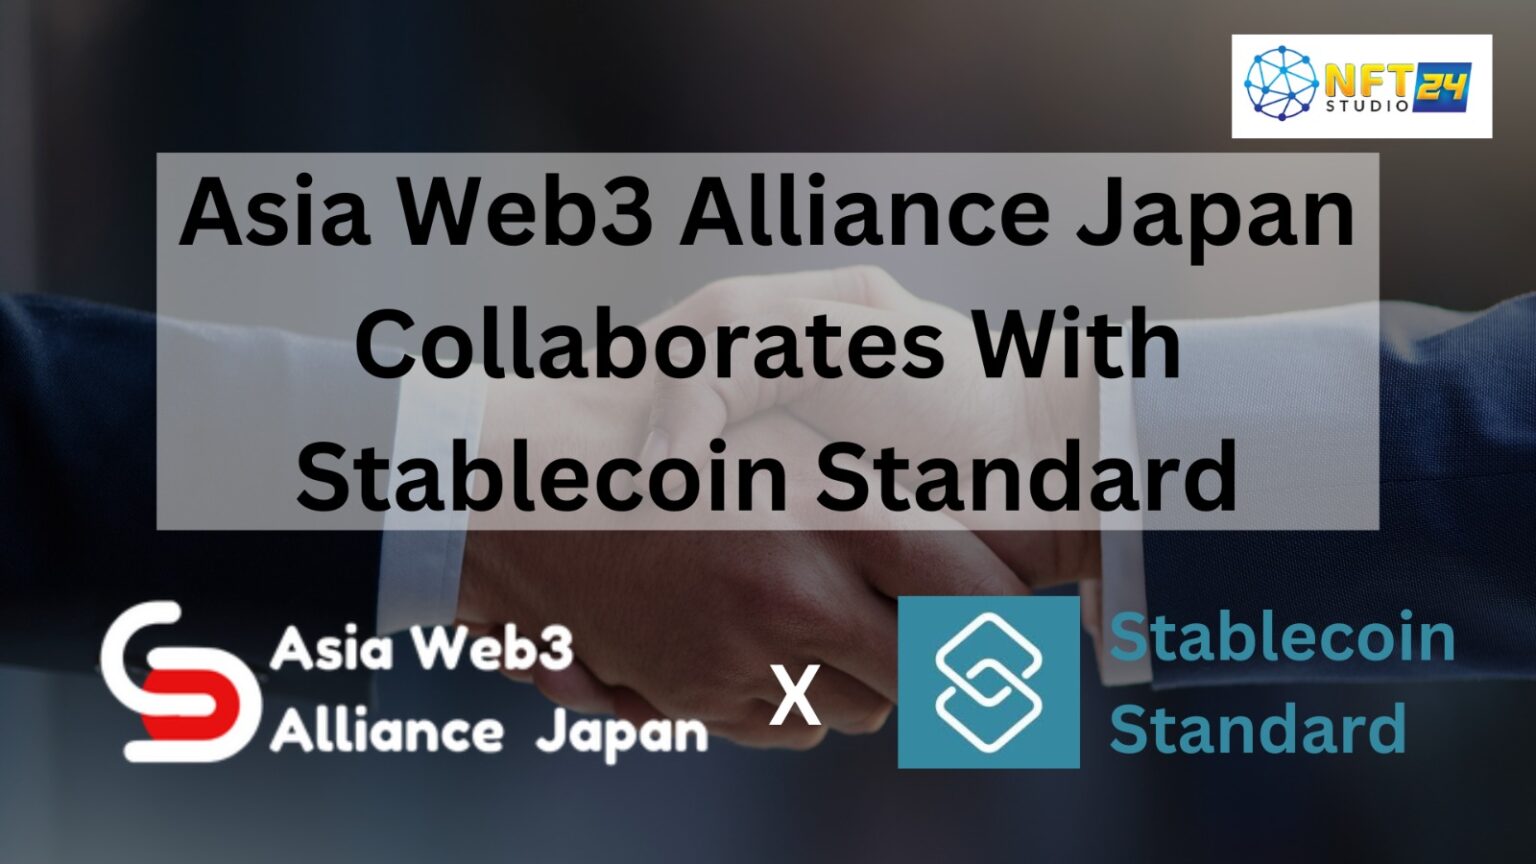 asia web3 alliance japan awaj collaborates with stablecoin standard